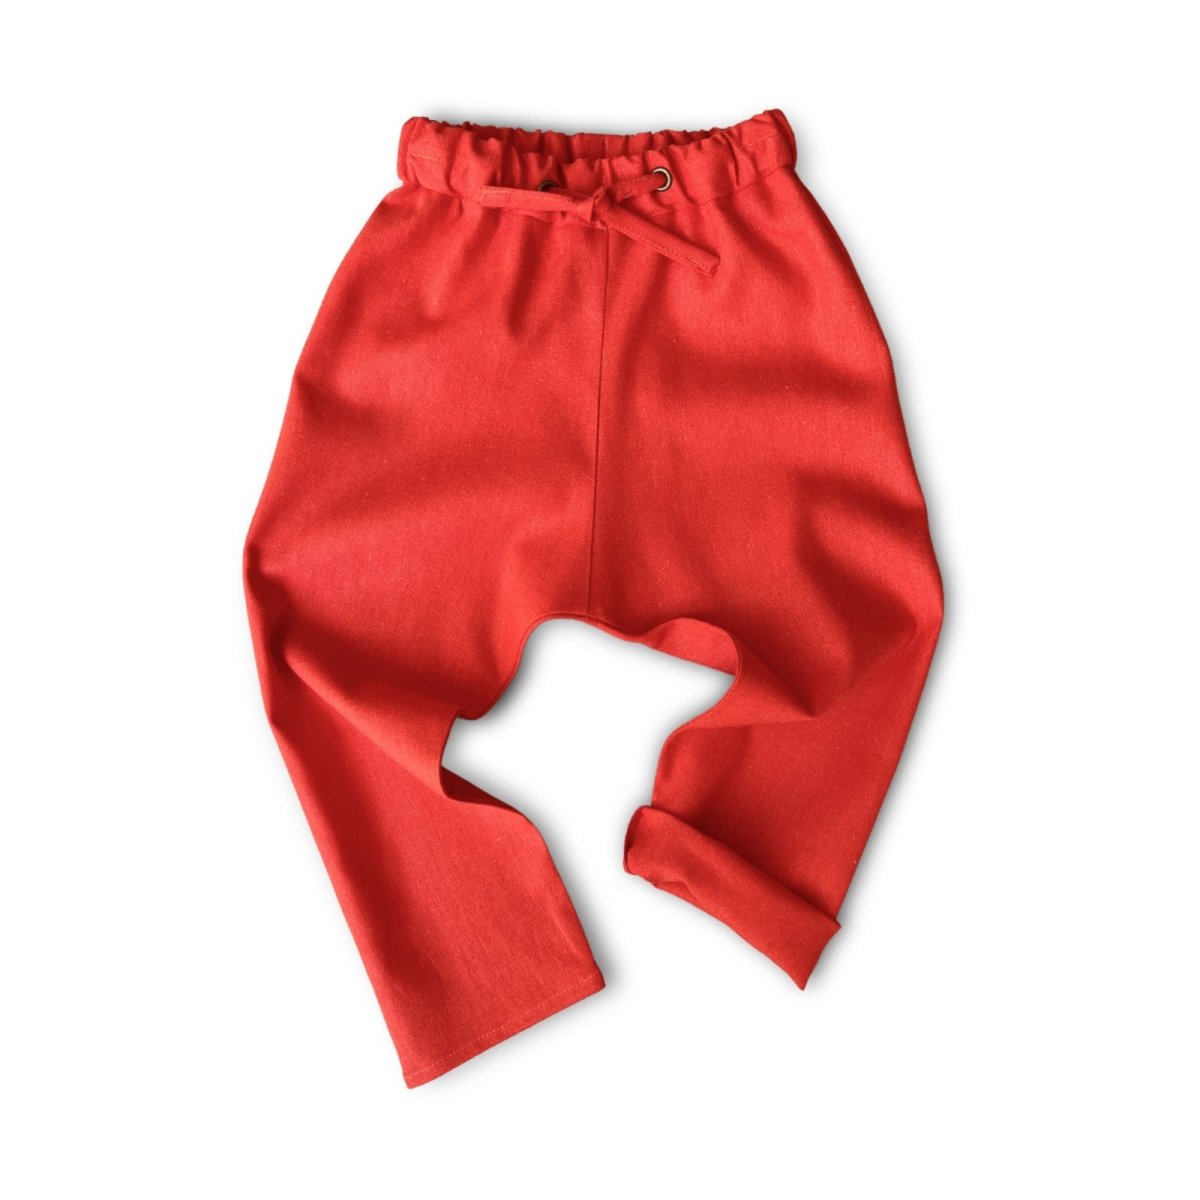 Firecracker Red Pants - Beya MadePANTS